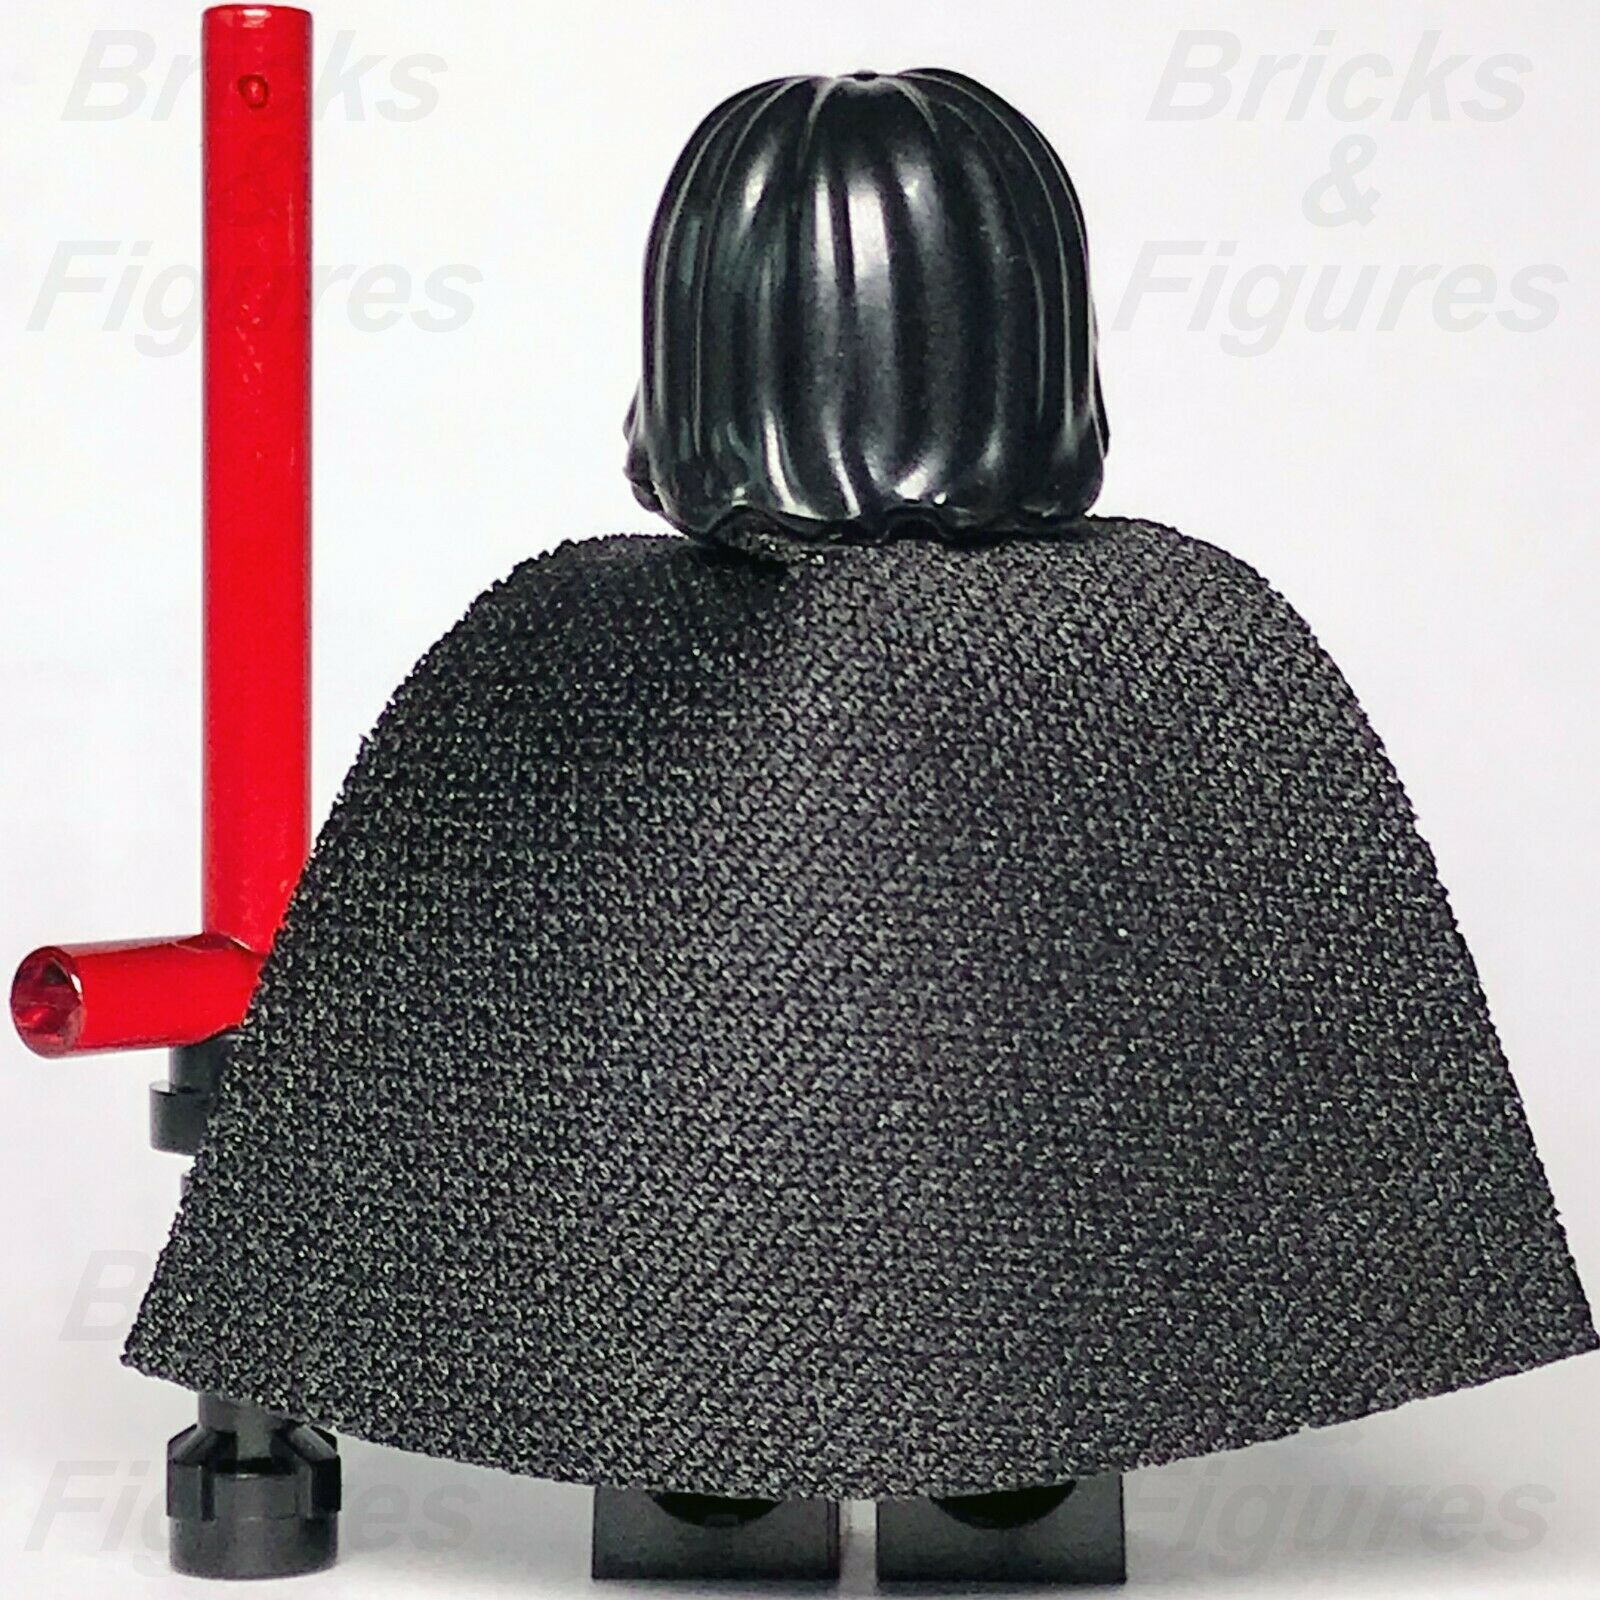 Star Wars LEGO Kylo Ren + Cape First Order Sith The Last Jedi Minifigure 75179 - Bricks & Figures